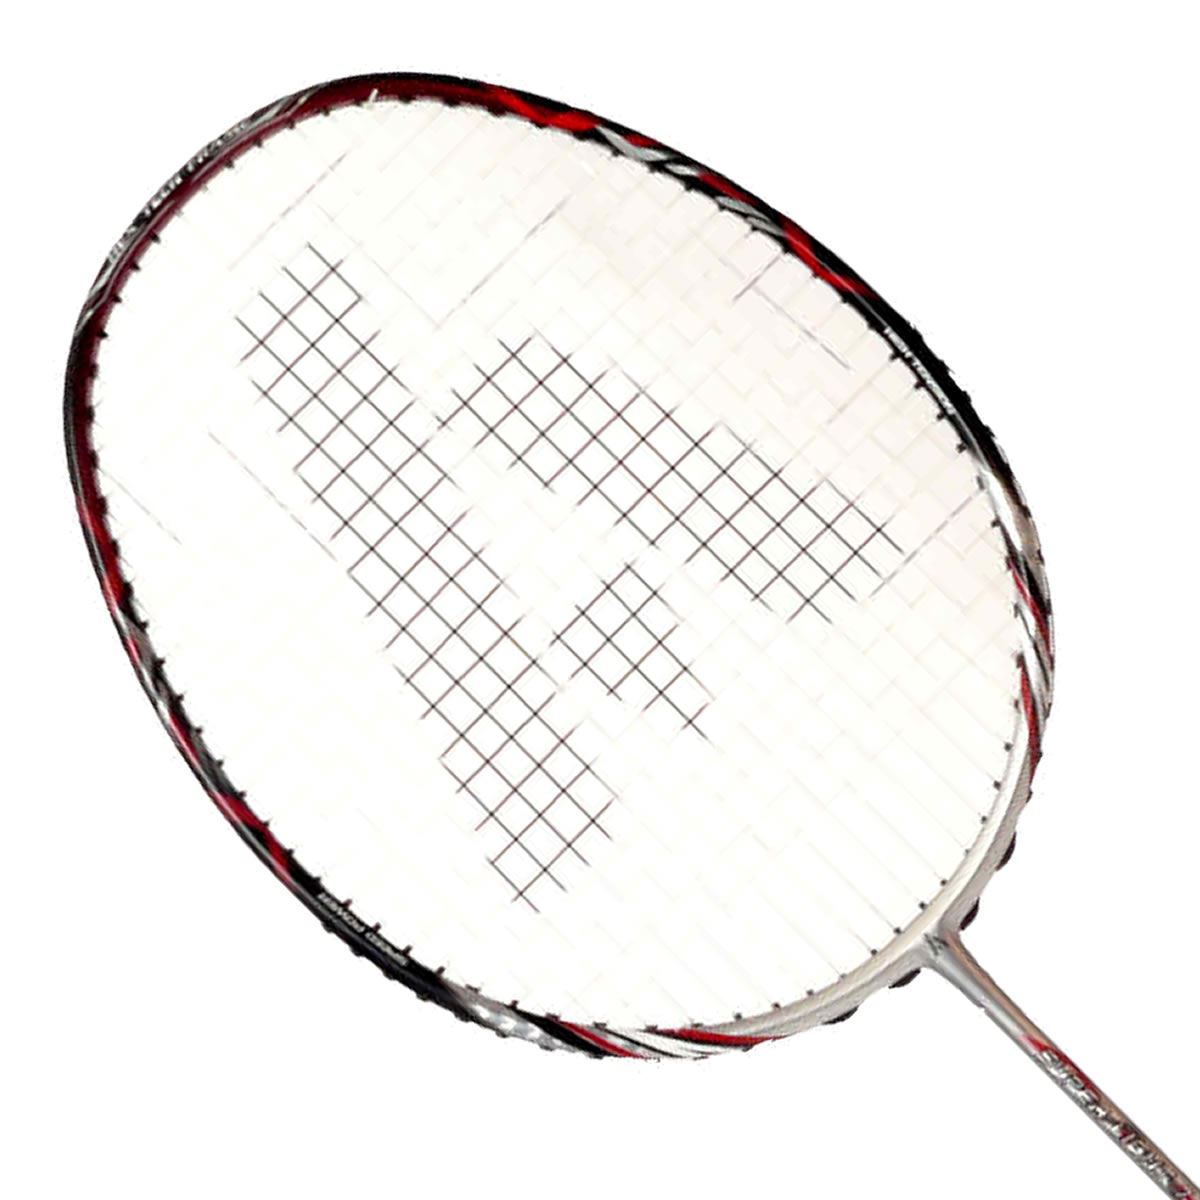 Ashaway Superlight 7 Hex Badminton Racket - Silver Red